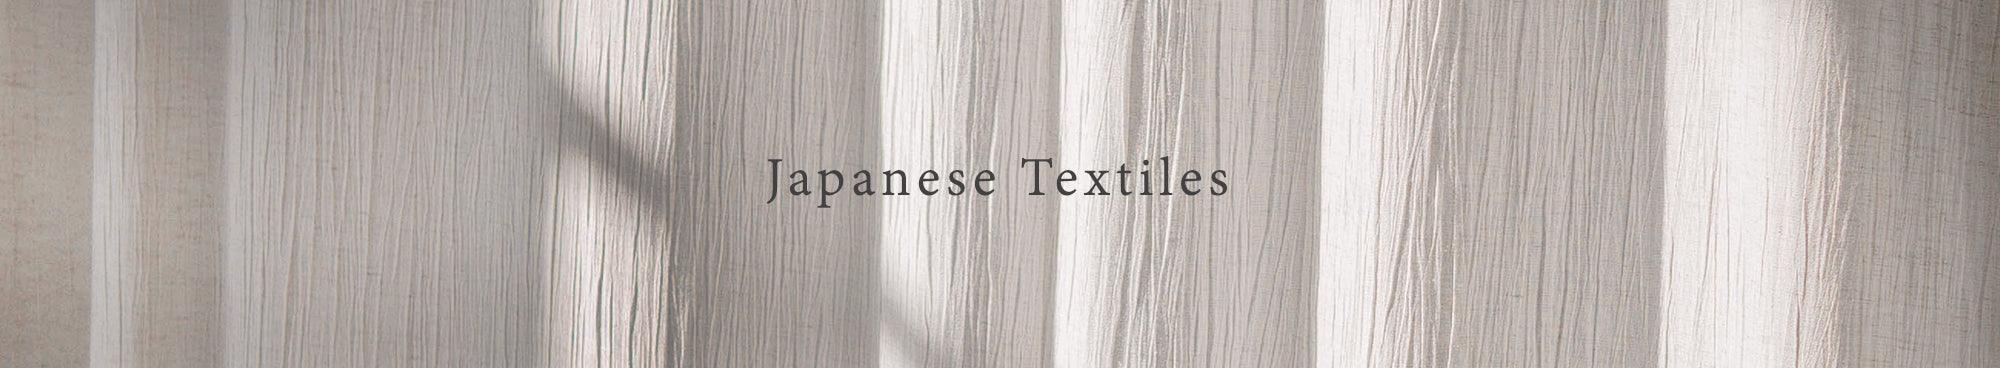 Japanese Textiles - Rikumo